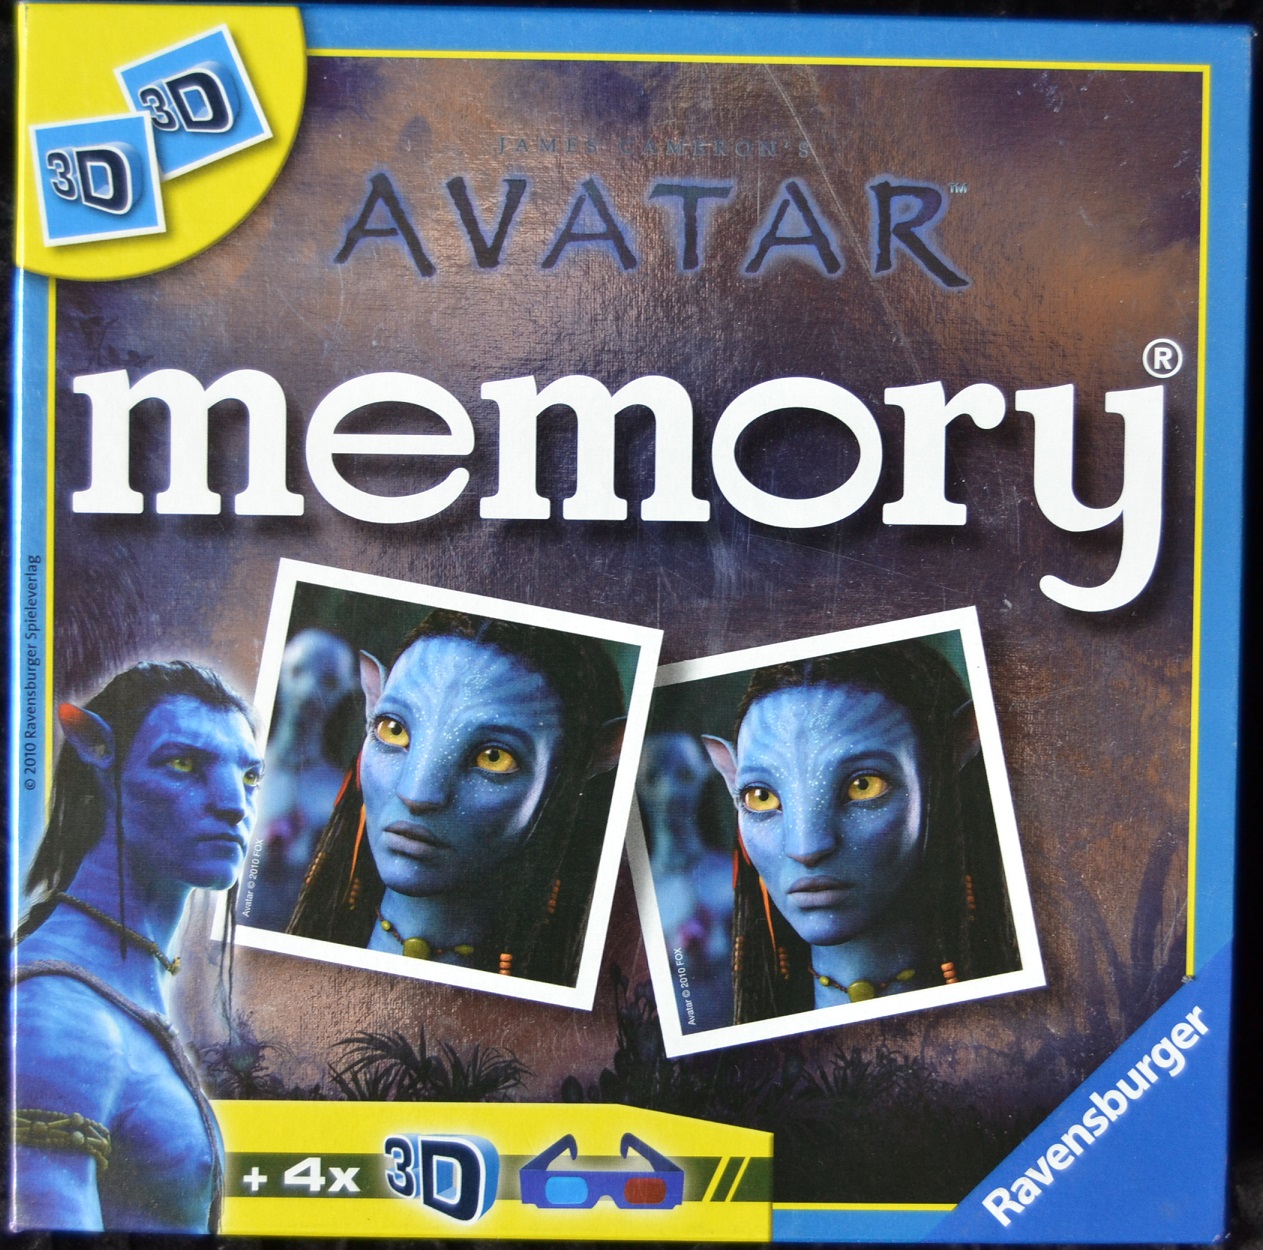 Avatar - memory®